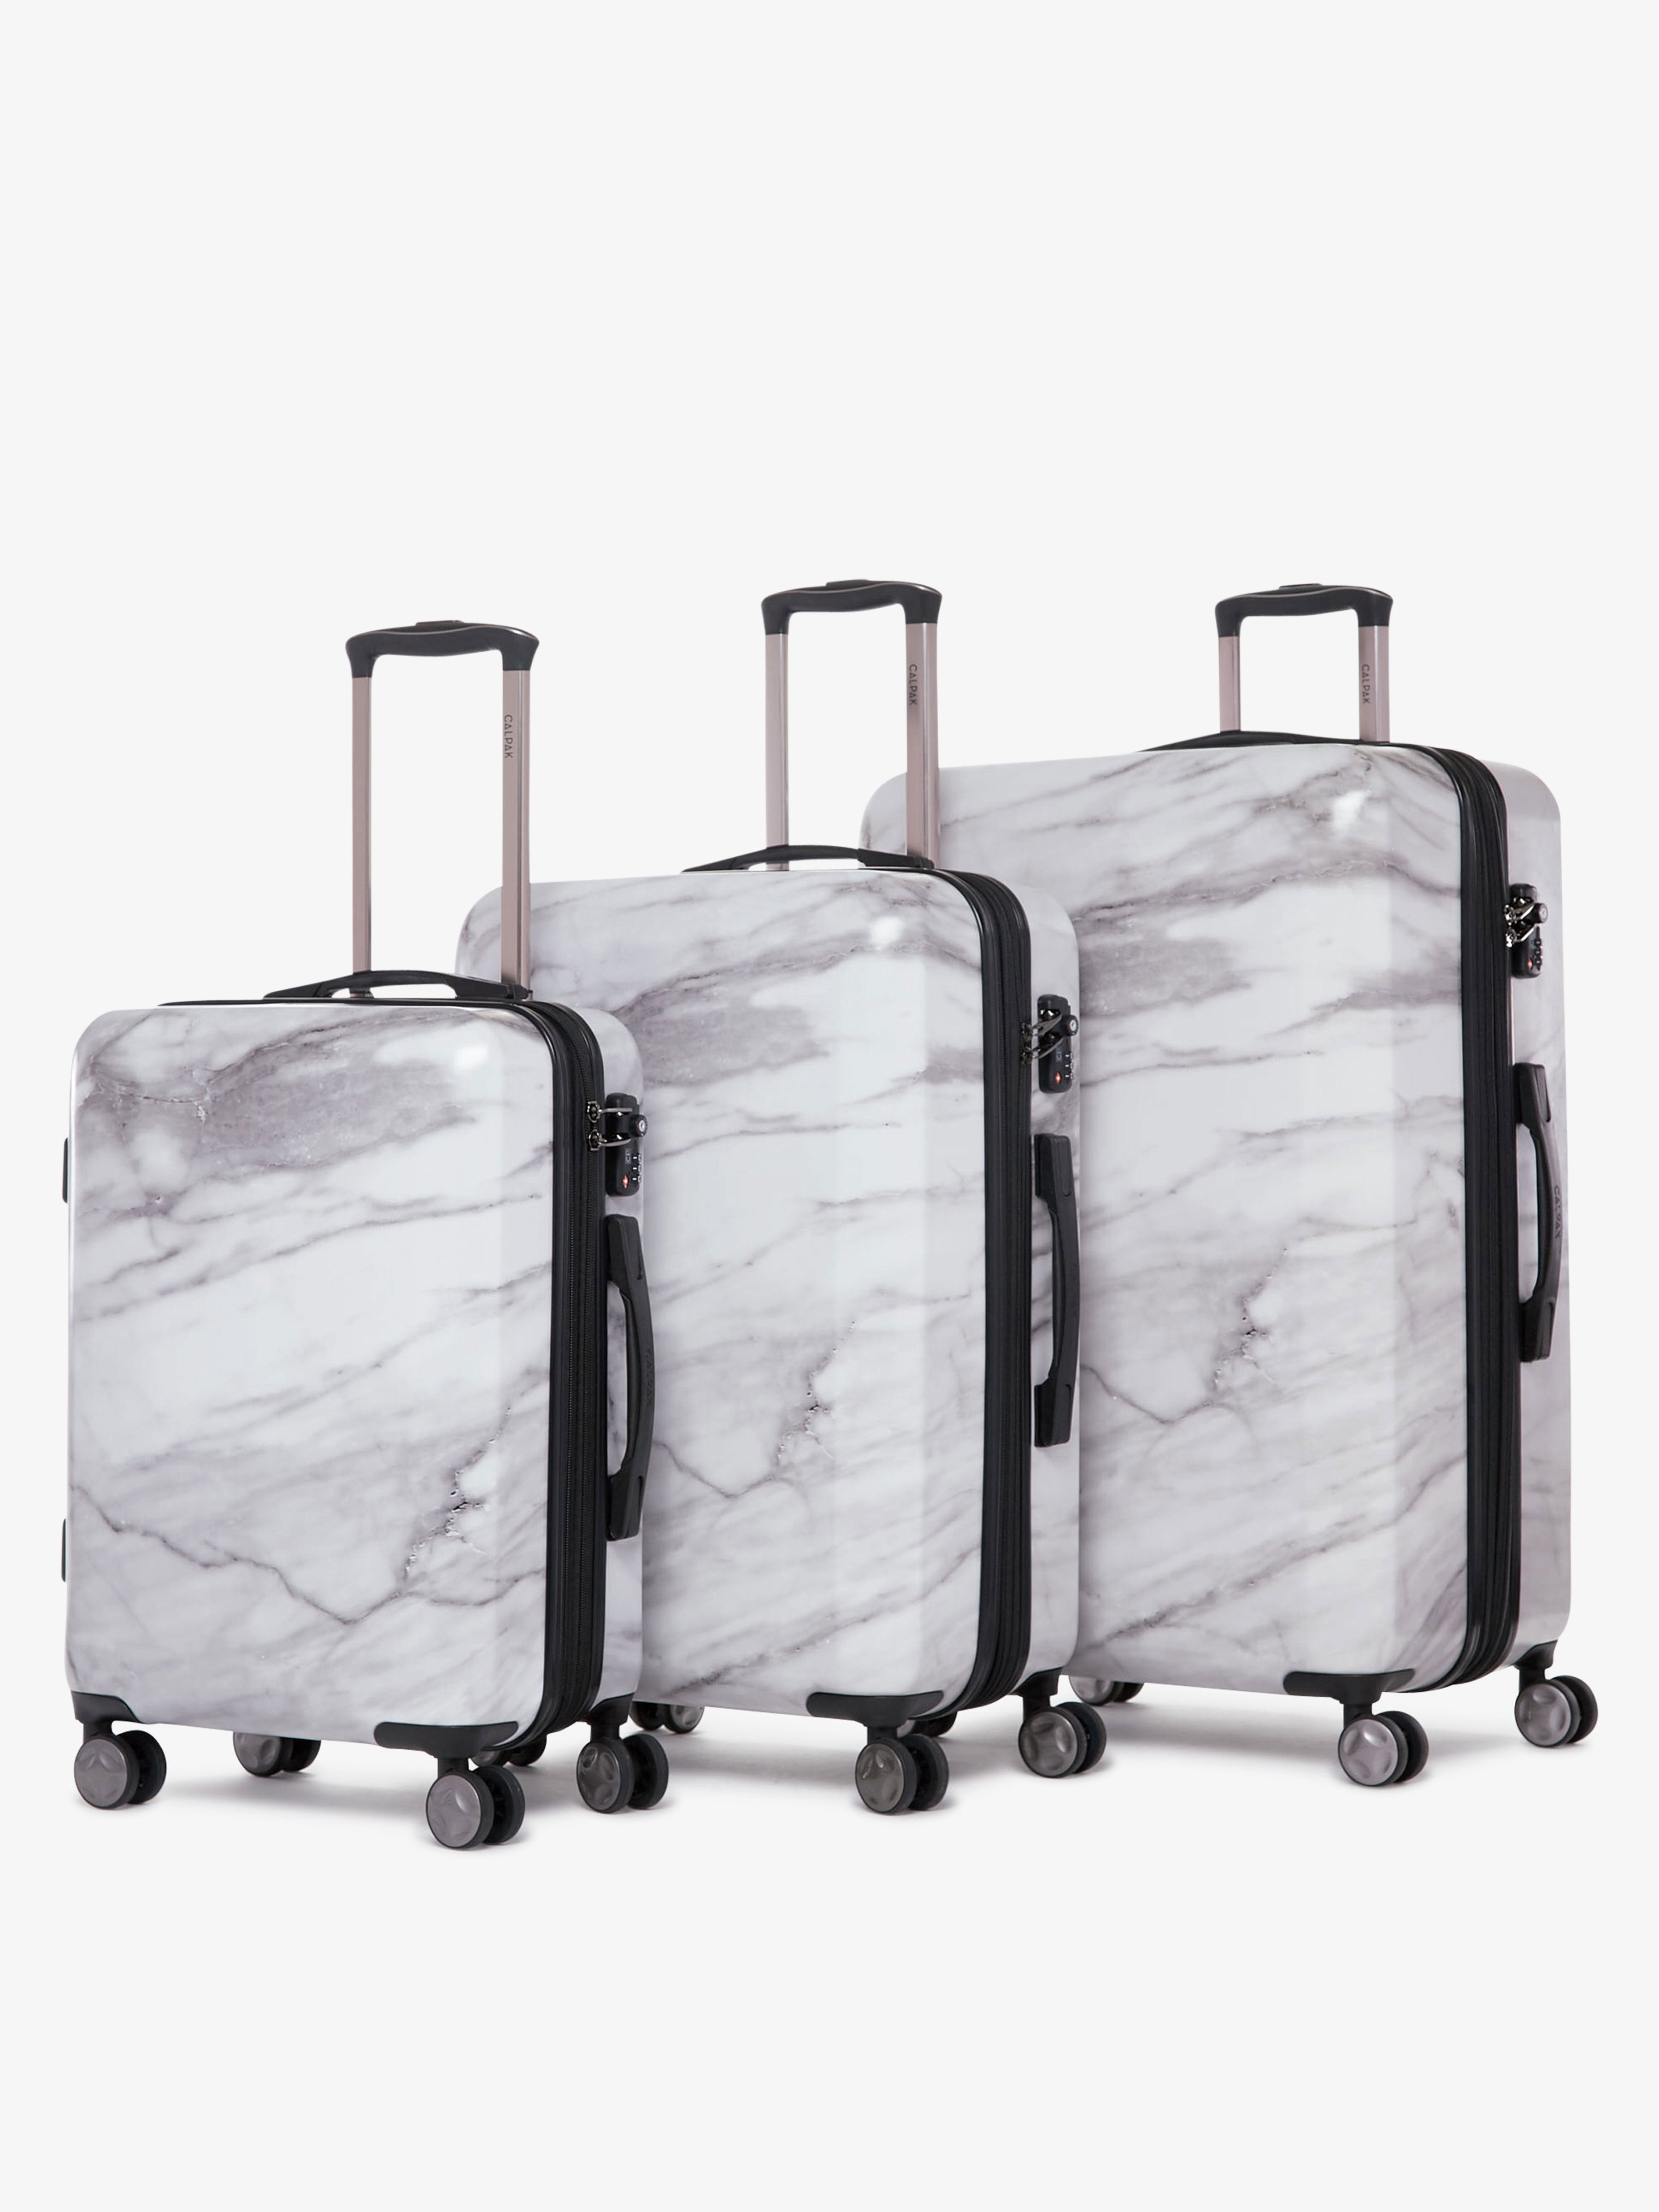 3 piece CALPAK Astyll hard shell white marble matching luggage set with built in TSA locks